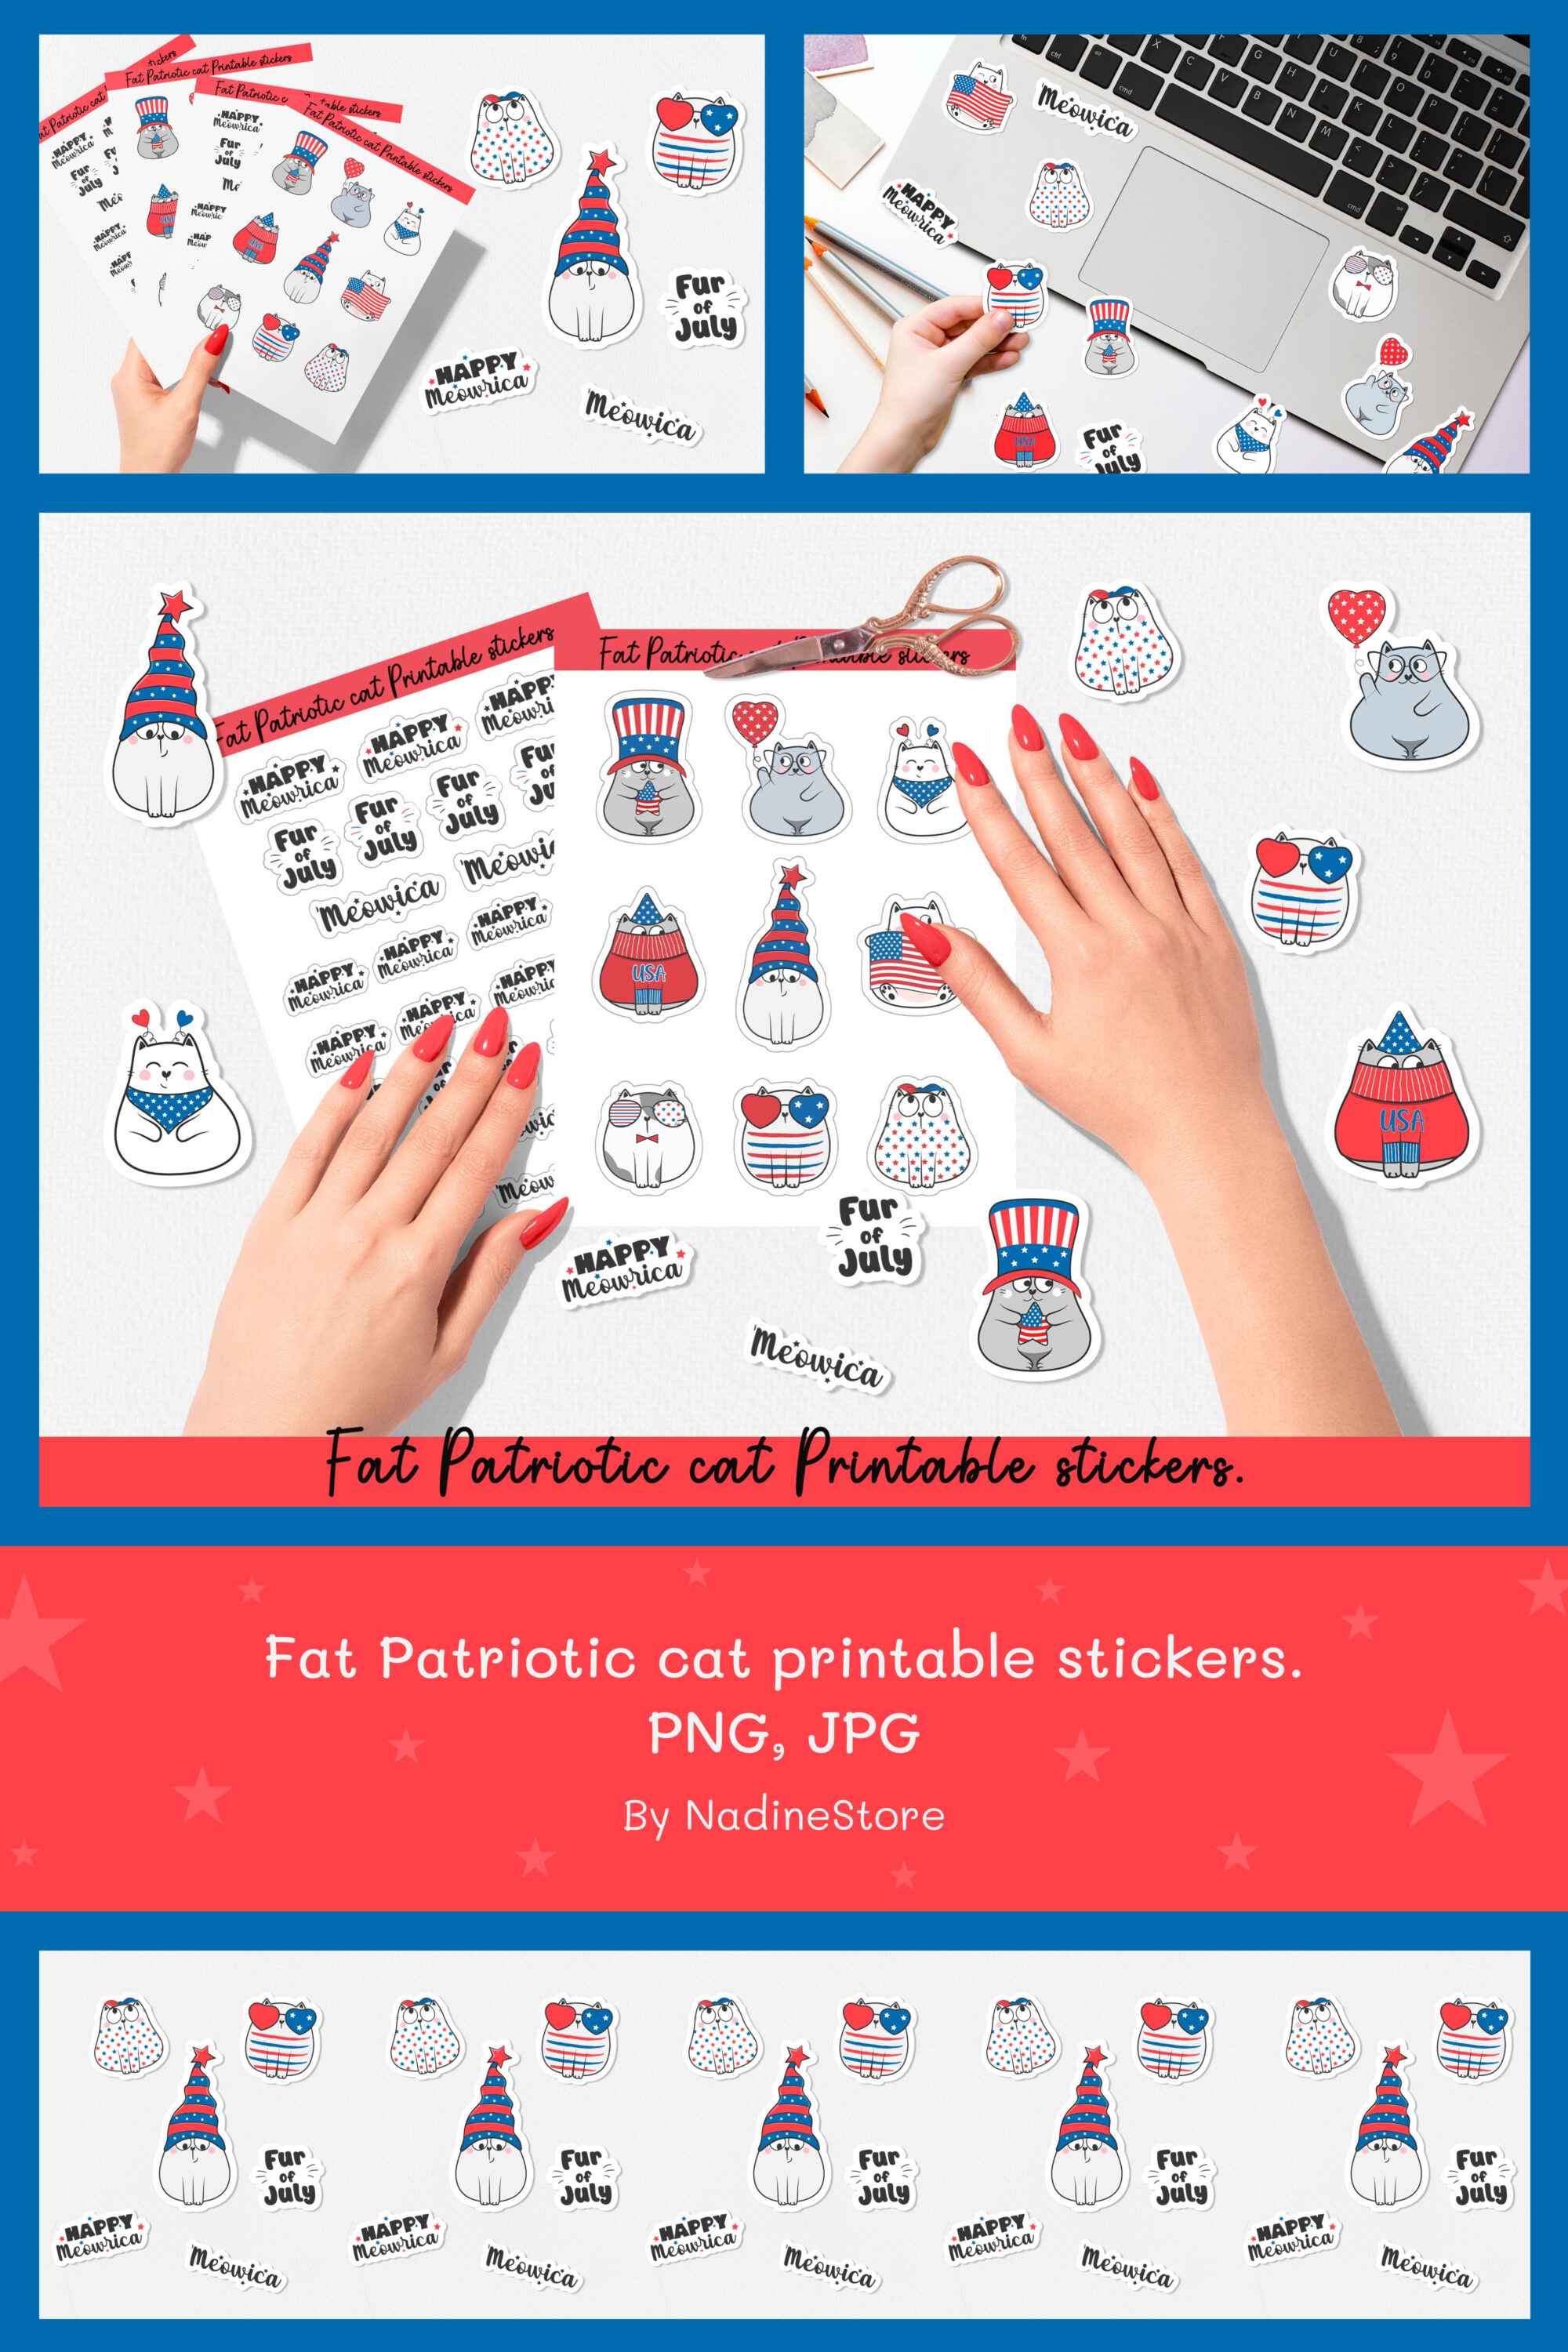 Fat patriotic cat printable stickers of pinterest.